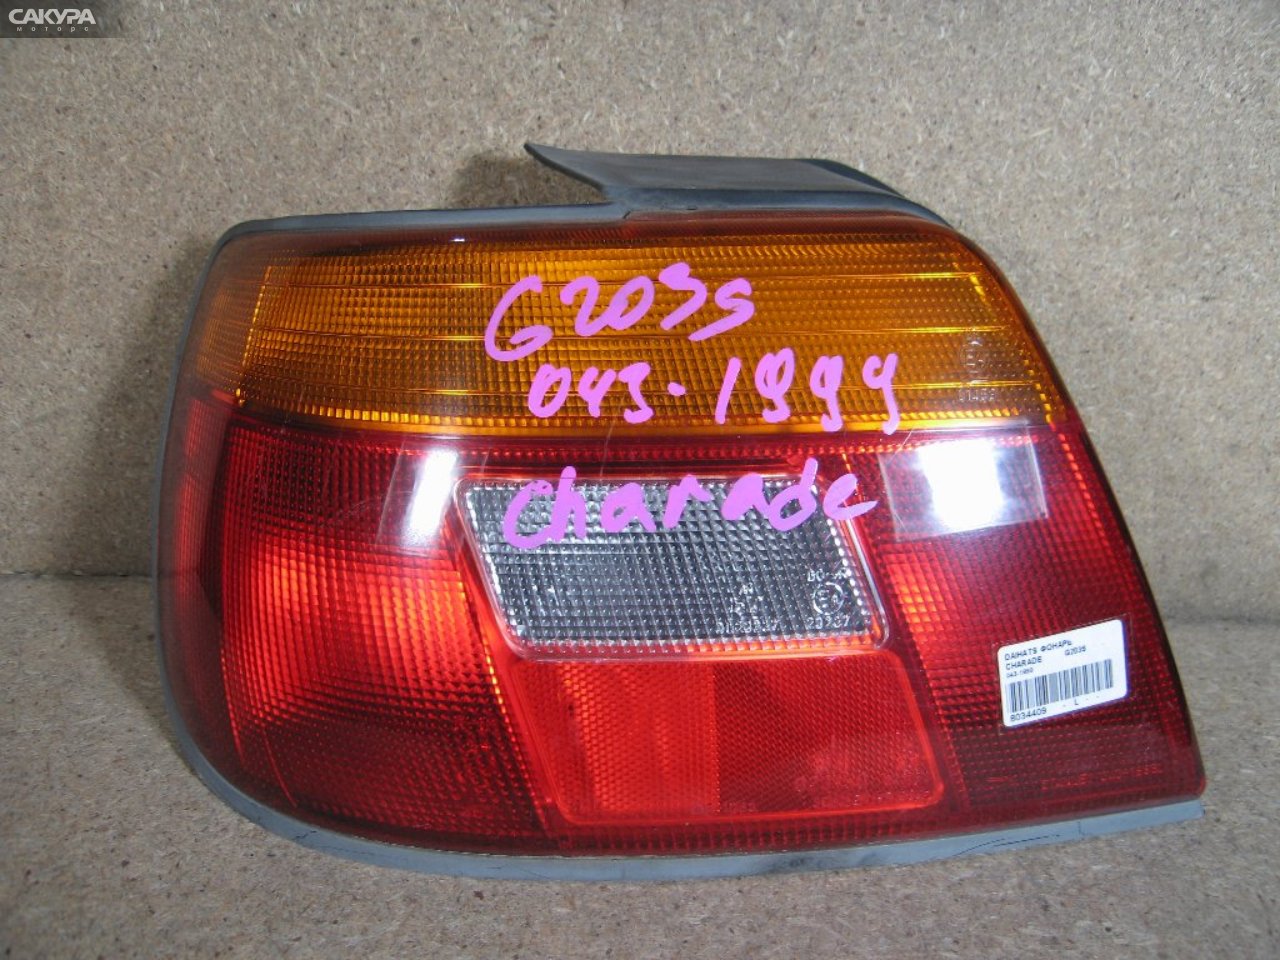 Фонарь стоп-сигнала левый Daihatsu Charade G203S 043-1999: купить в Сакура Абакан.